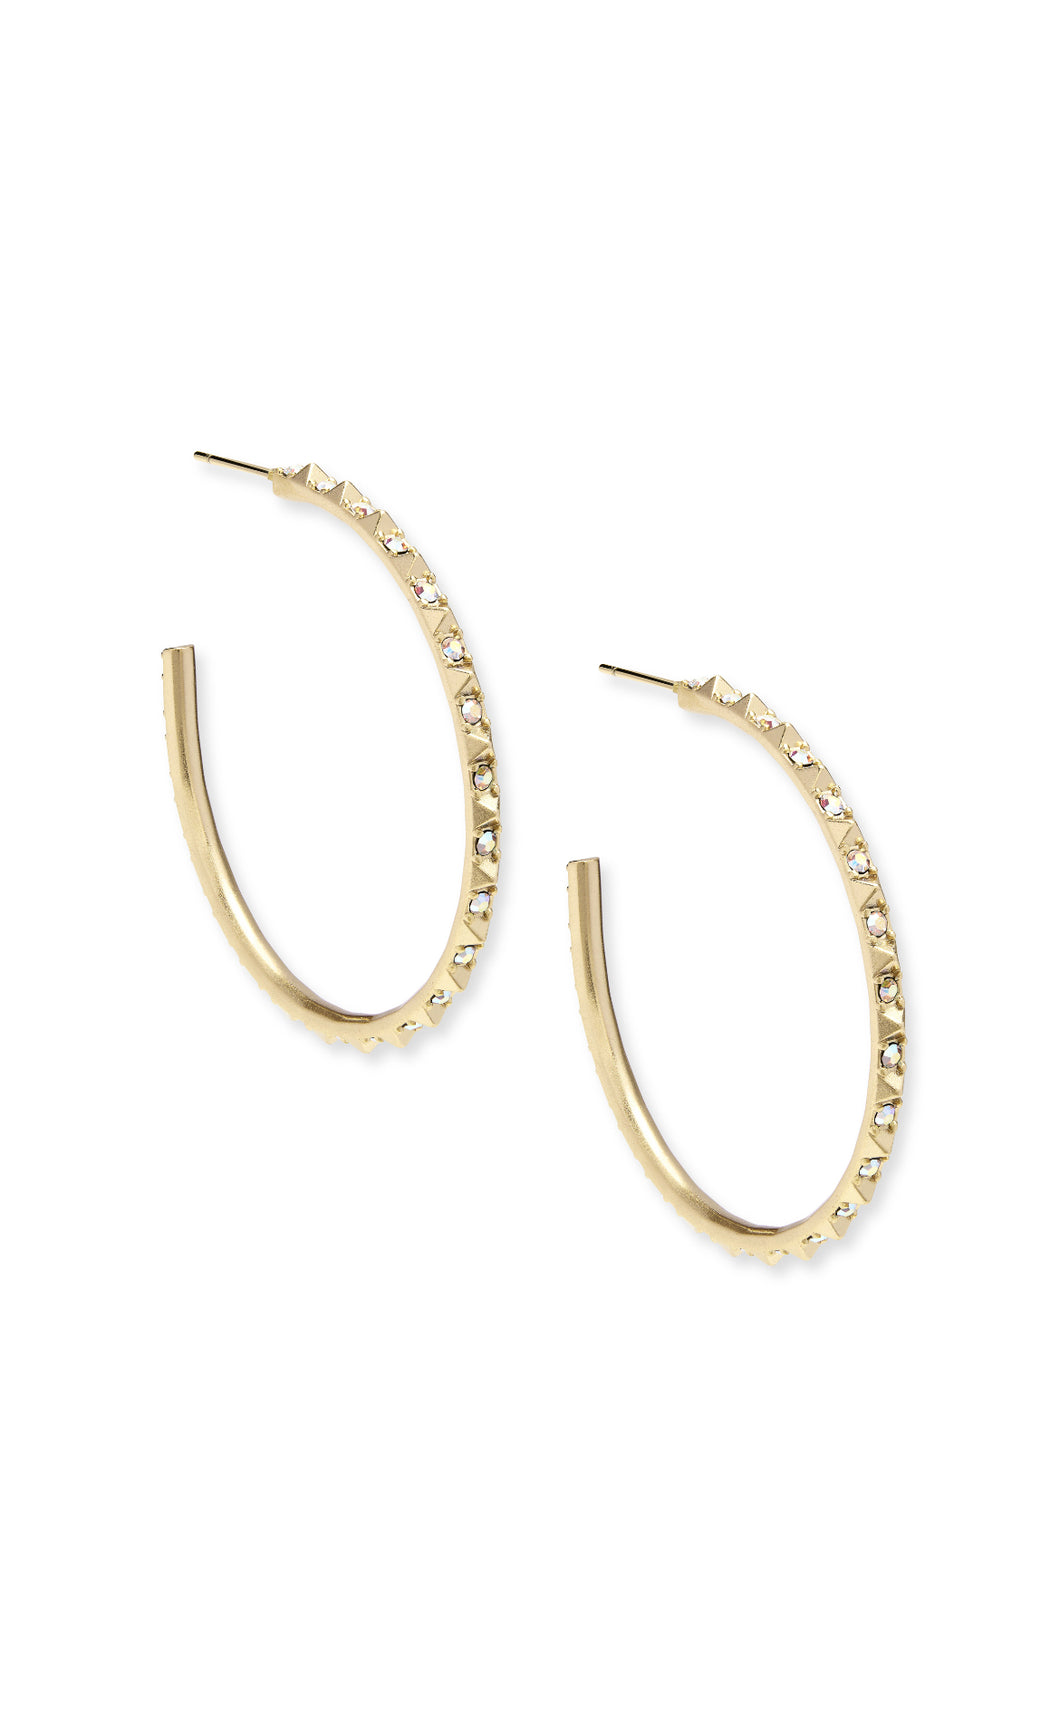 Kendra Scott: Veronica Hoop Earrings in Gold